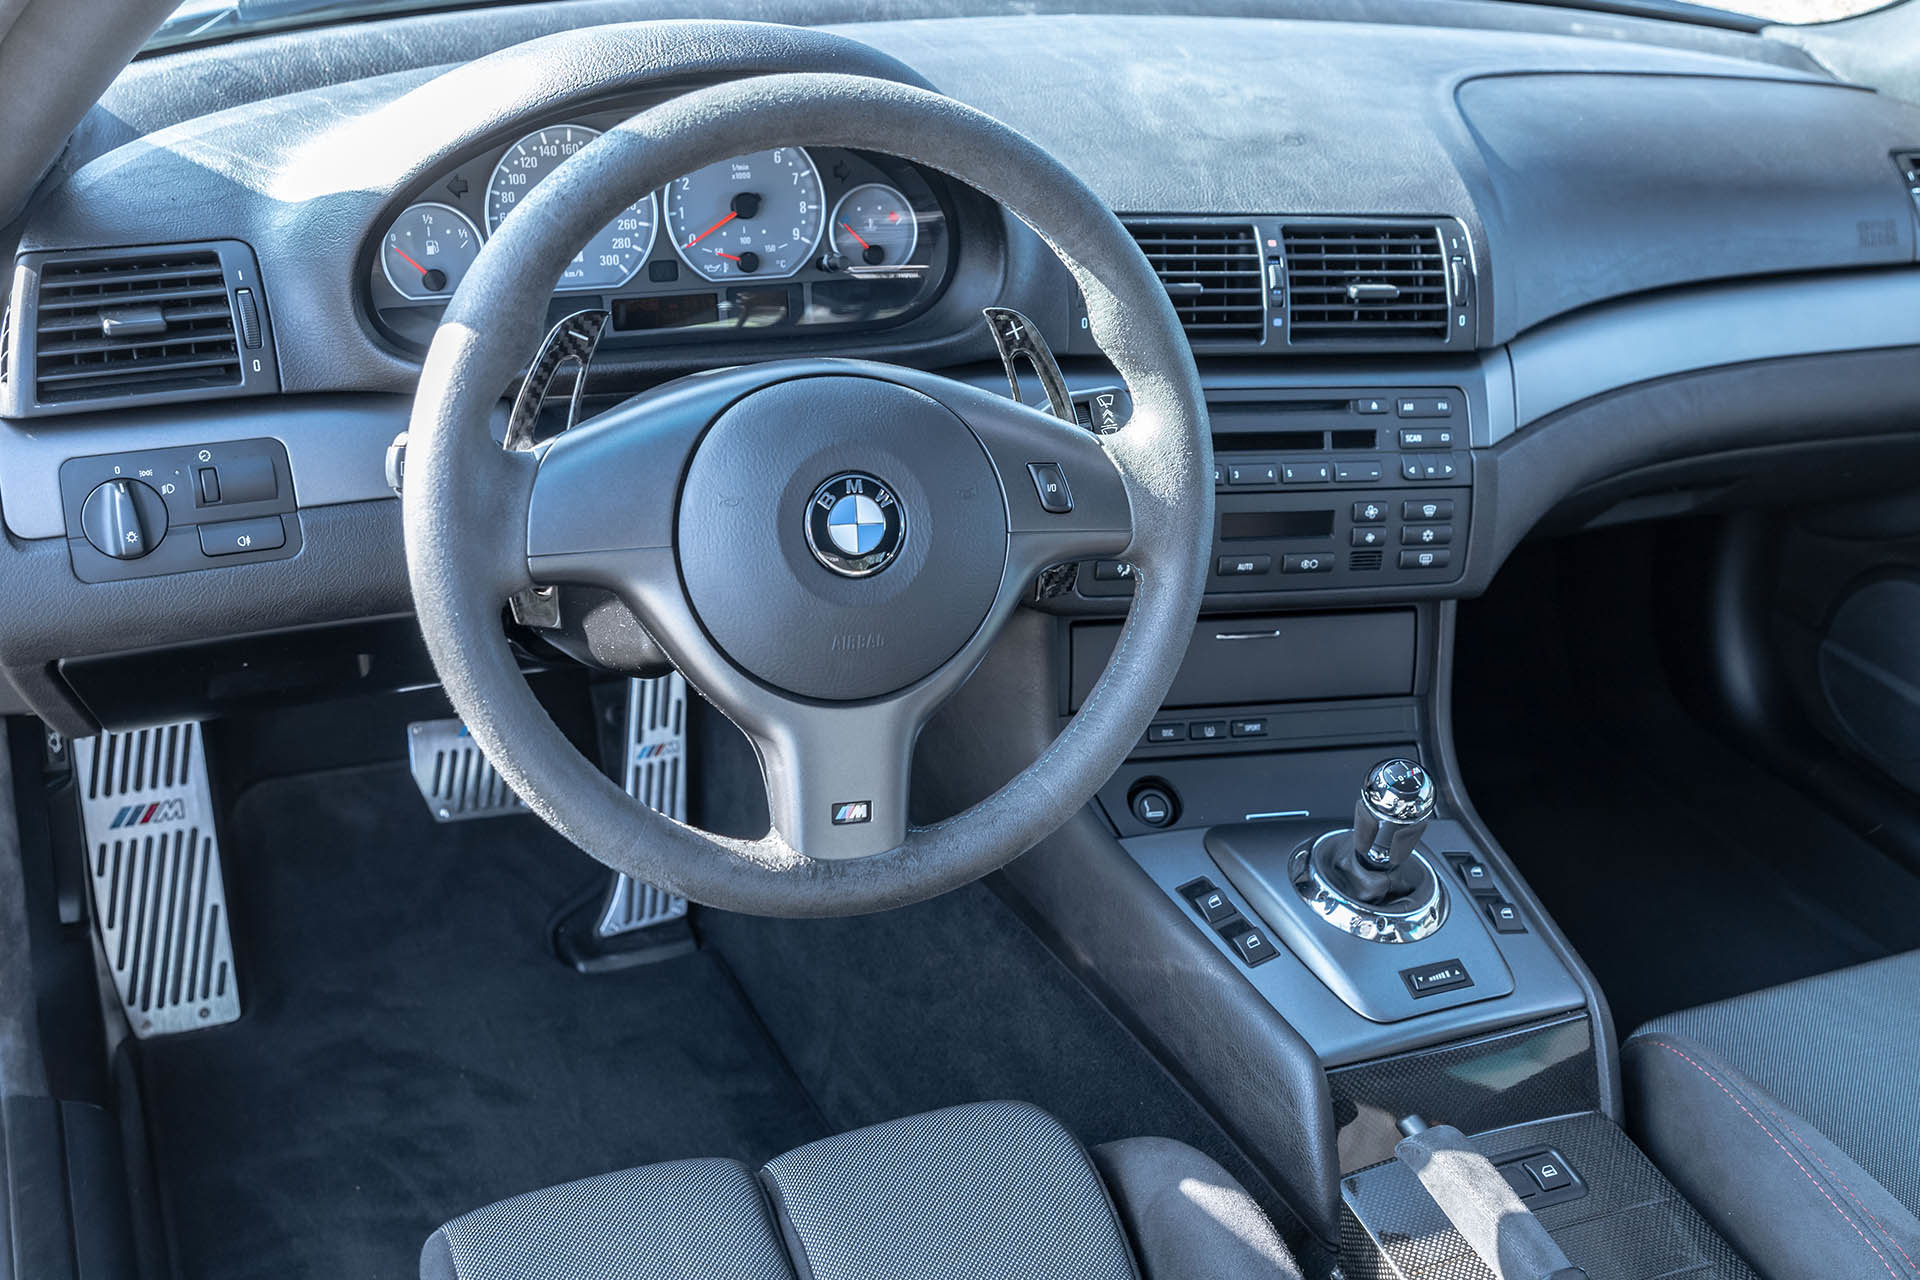 Real Art on Wheels | BMW M3 CSL